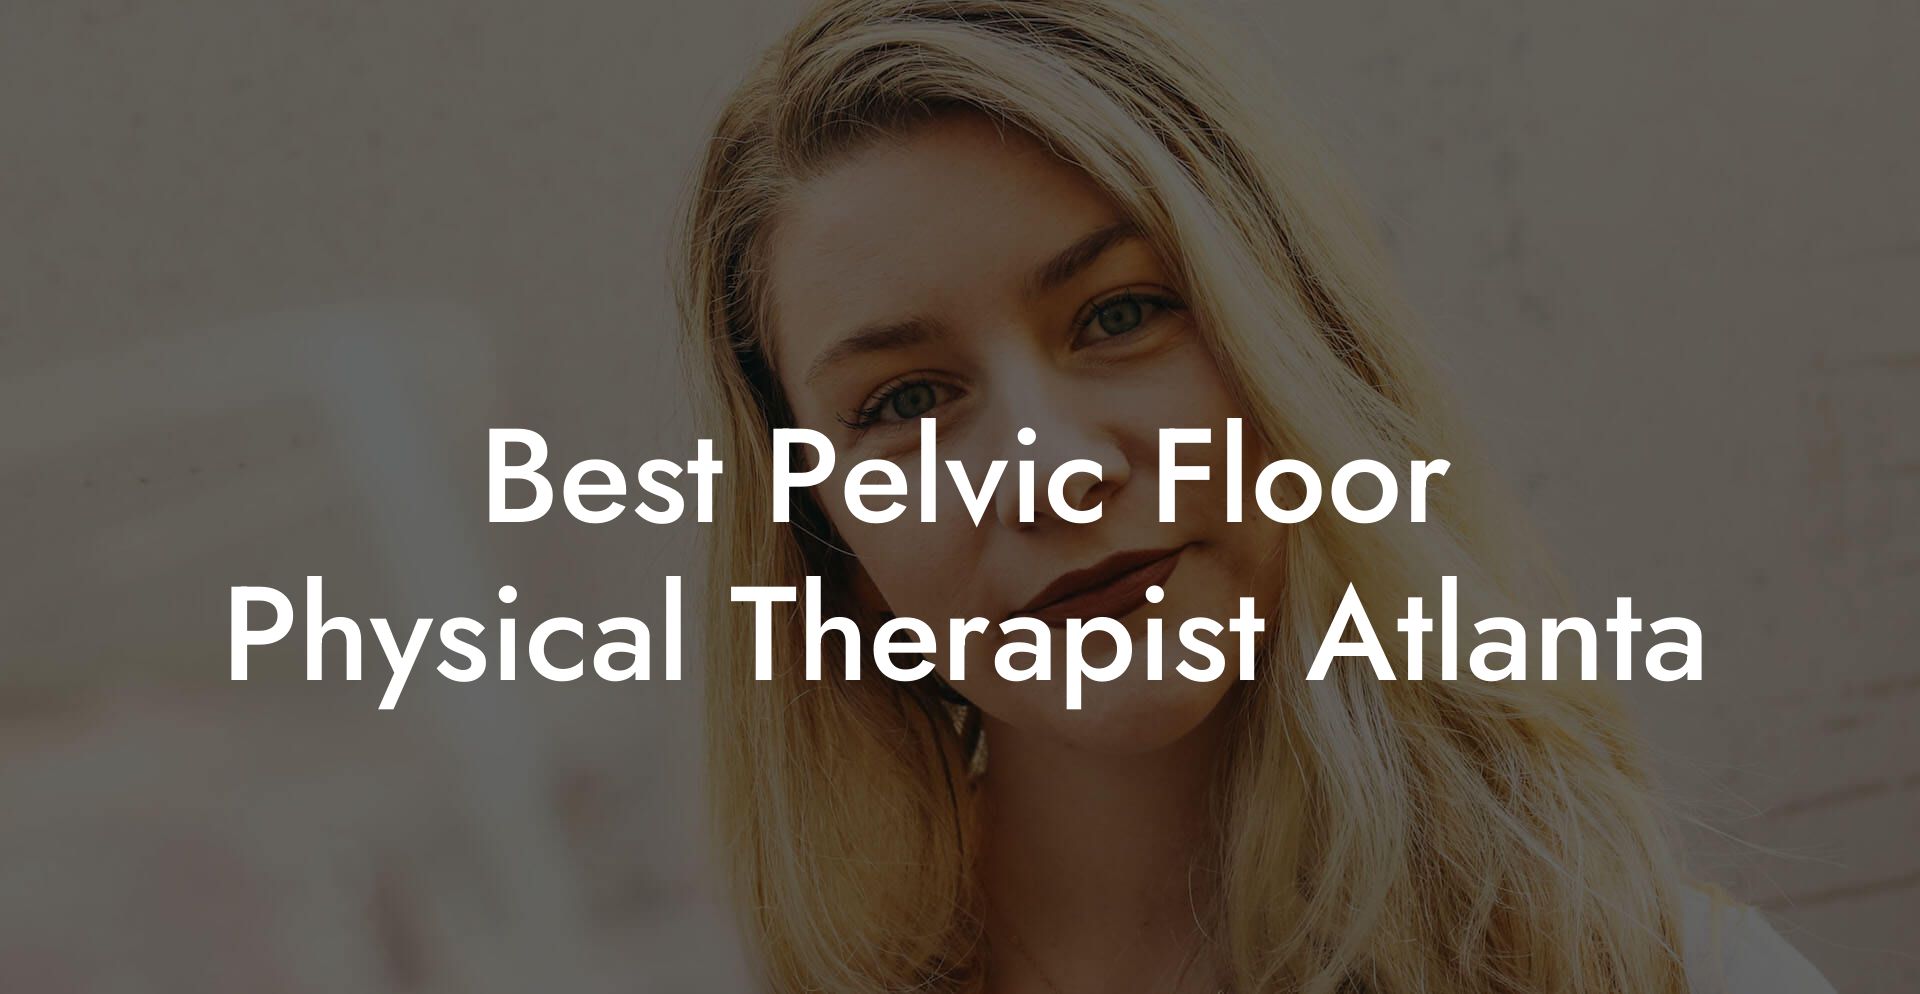 Best Pelvic Floor Physical Therapist Atlanta